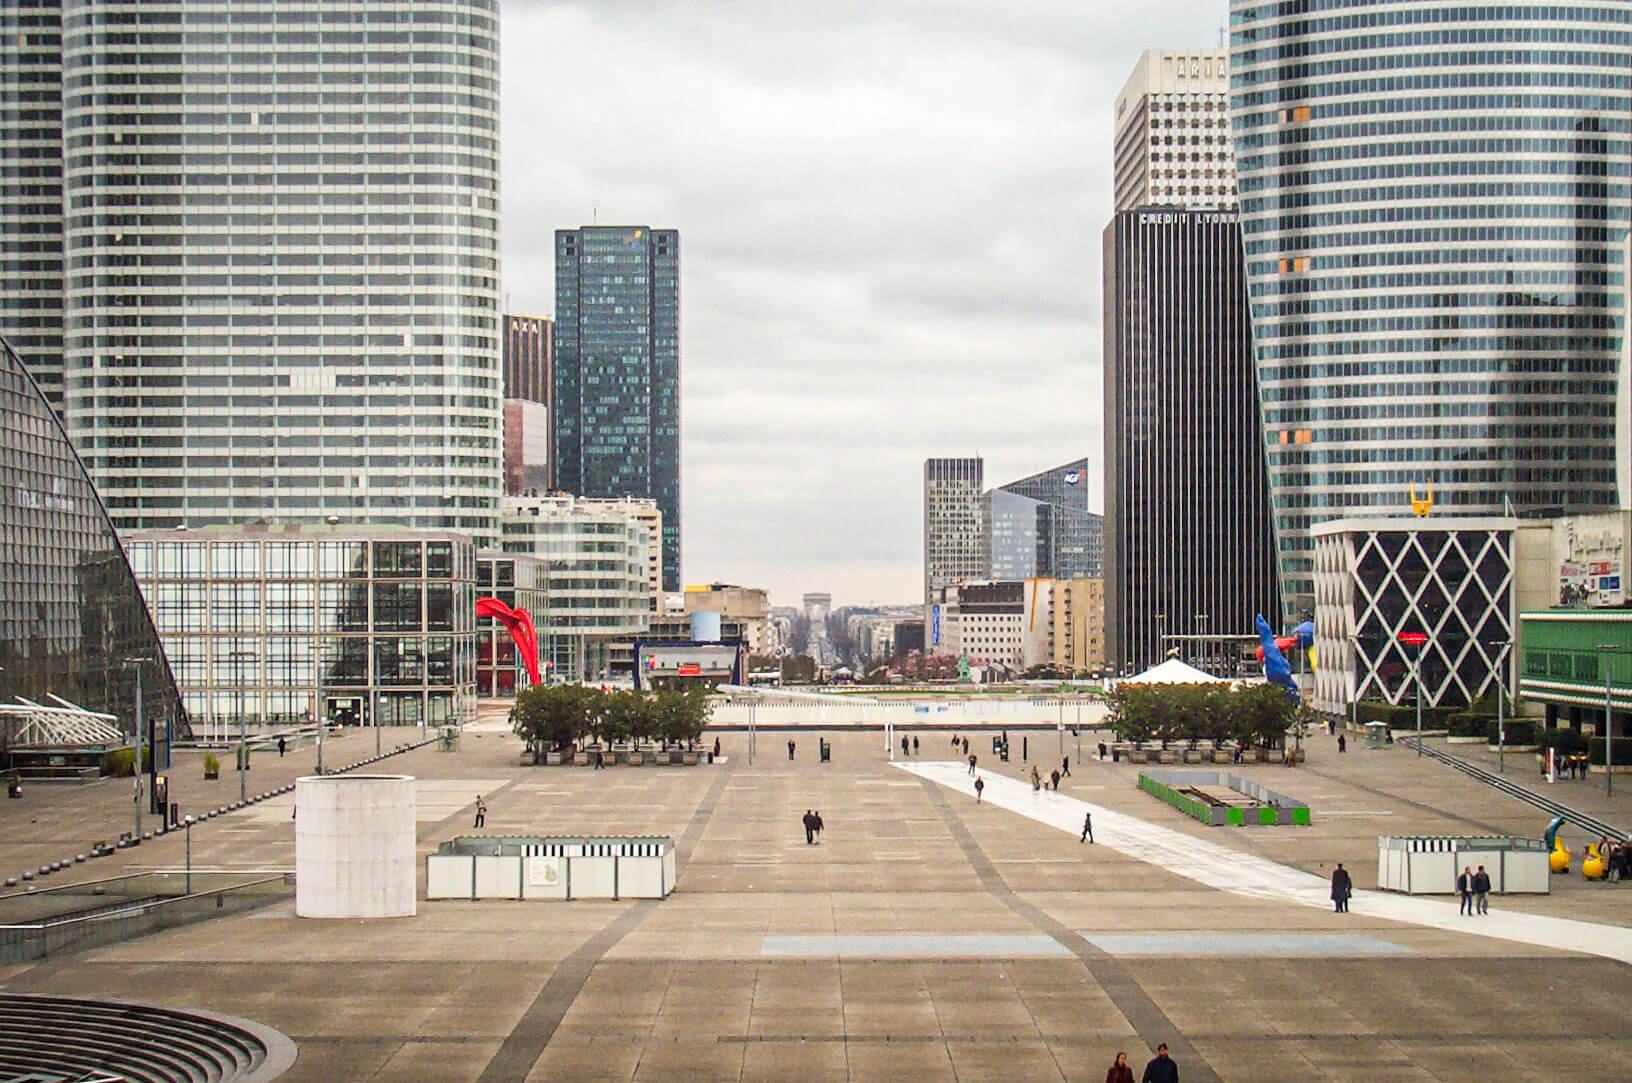 View from Grande Arche de la Défense into Paris with the Arc de Triomphe visible in the distance